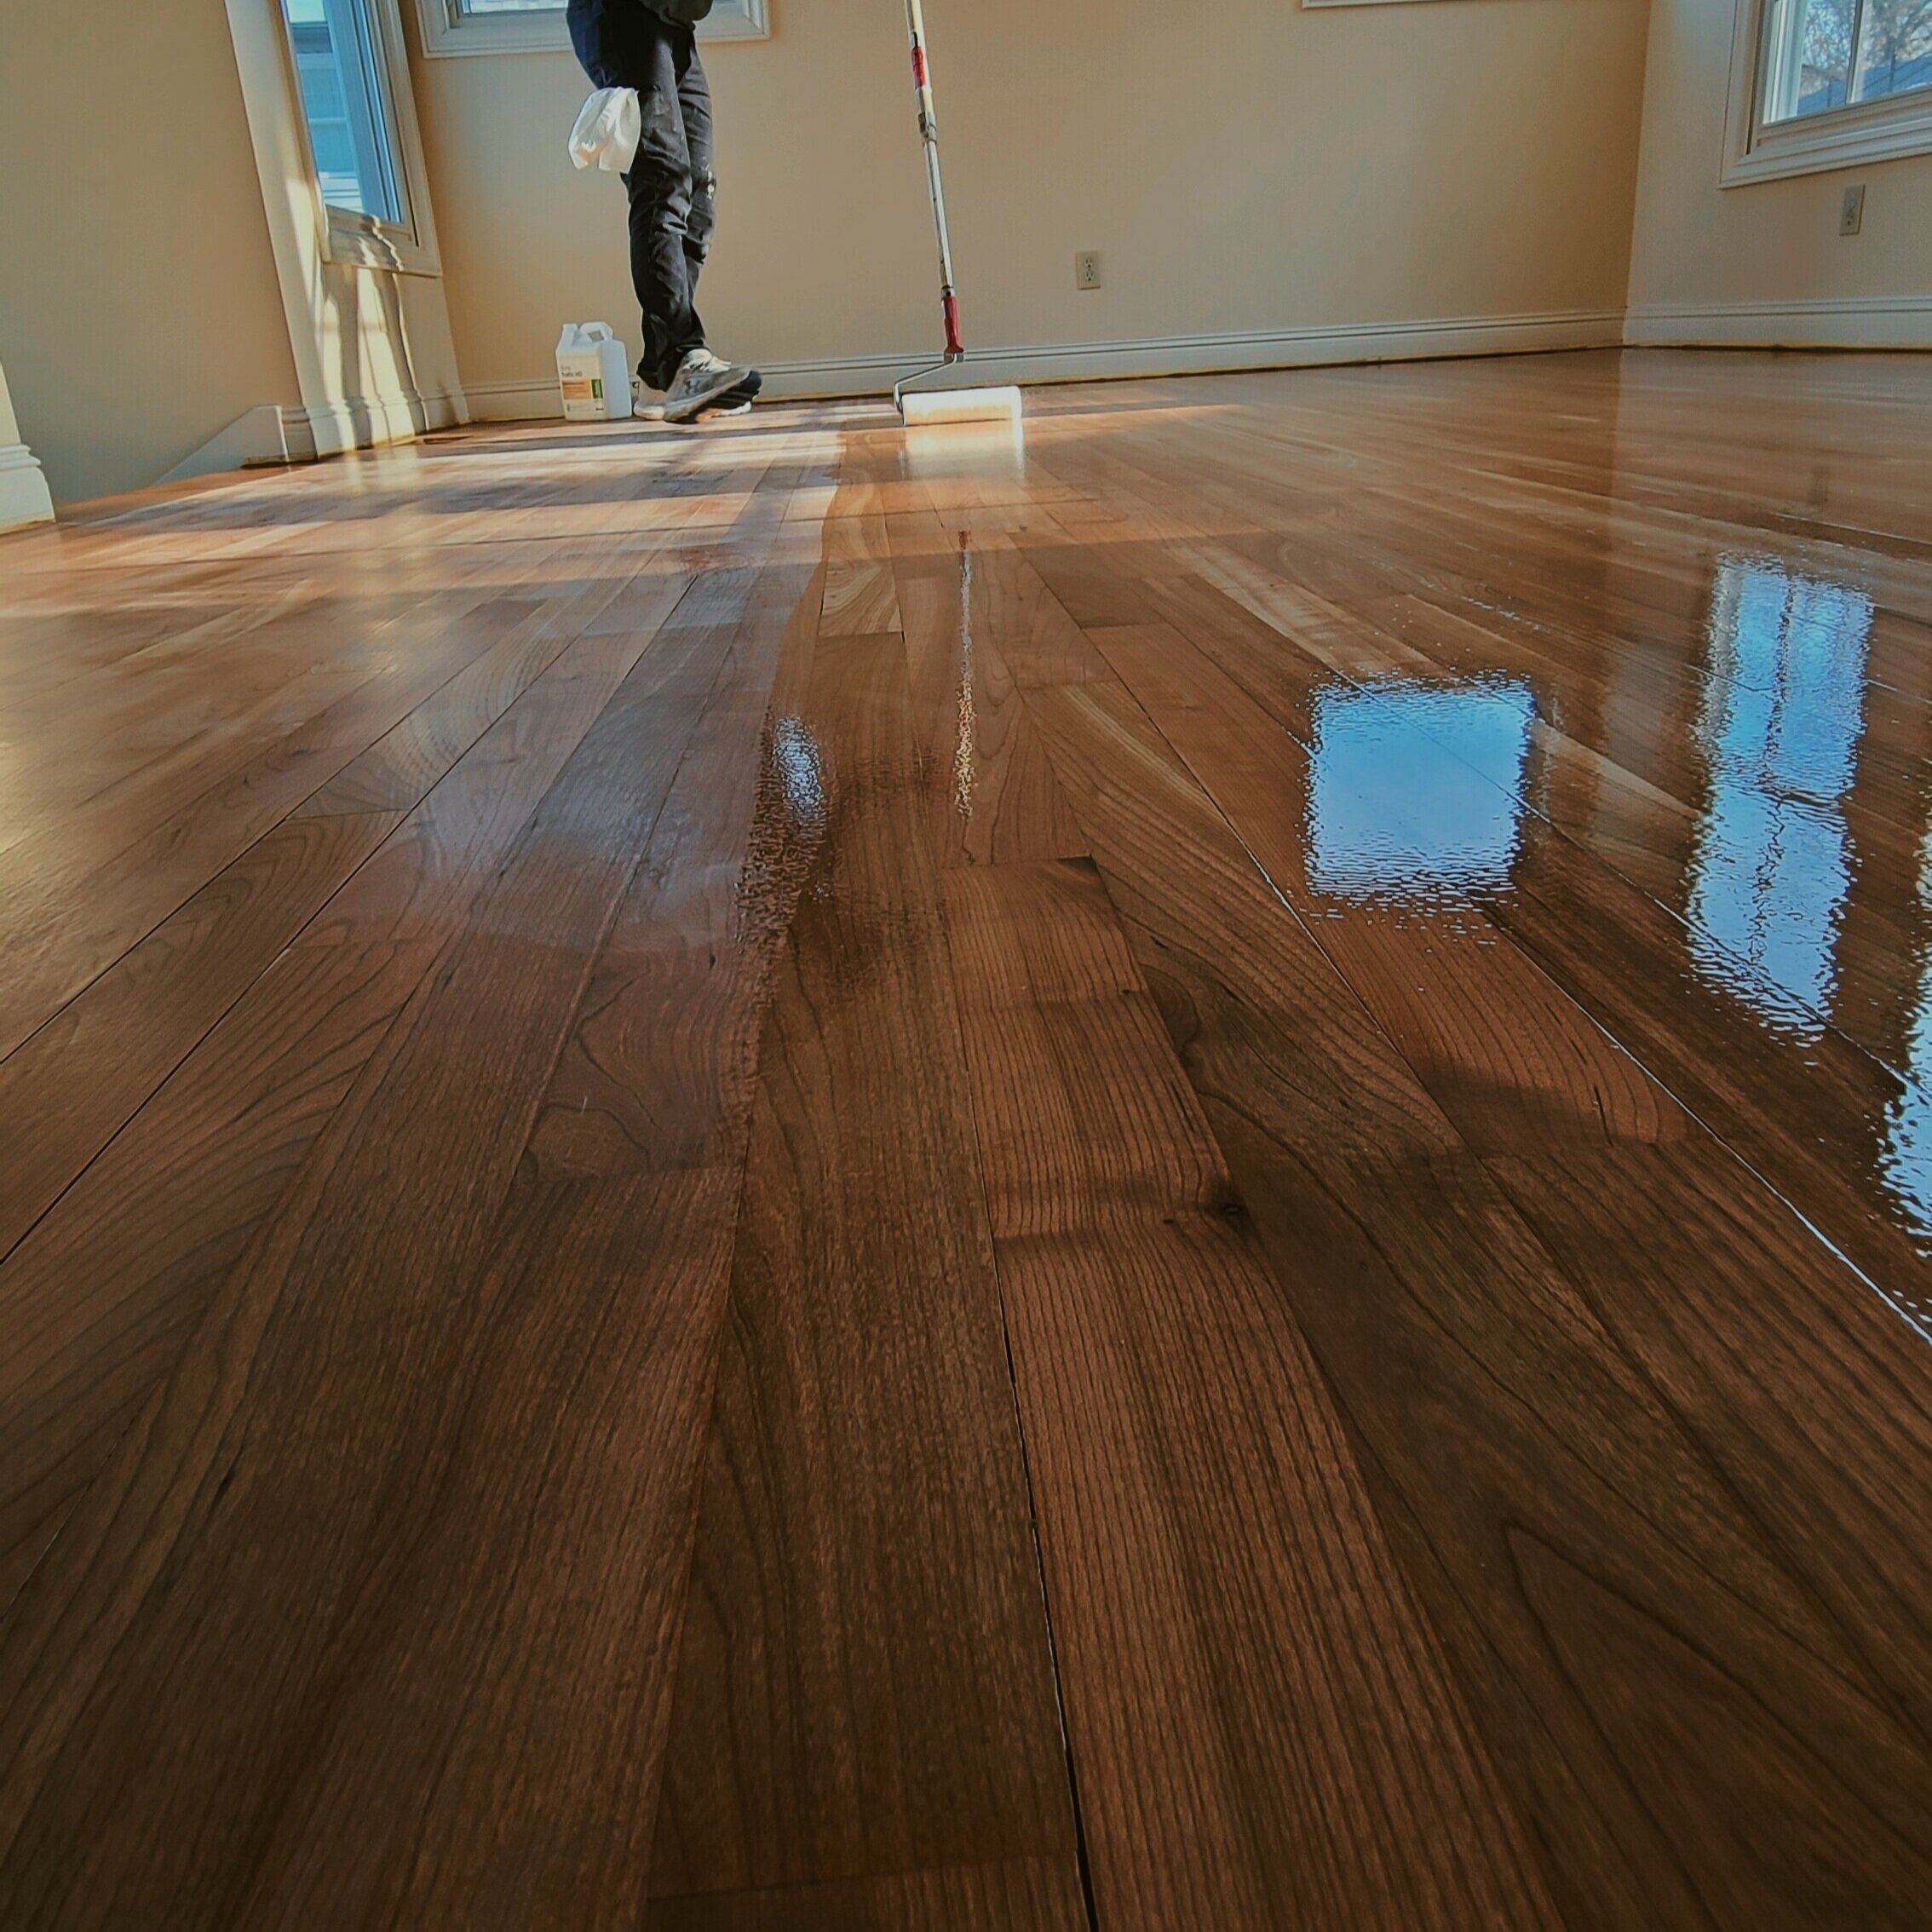 Wood Tech Hardwood Flooring West, Bona Hardwood Floor Refinishing